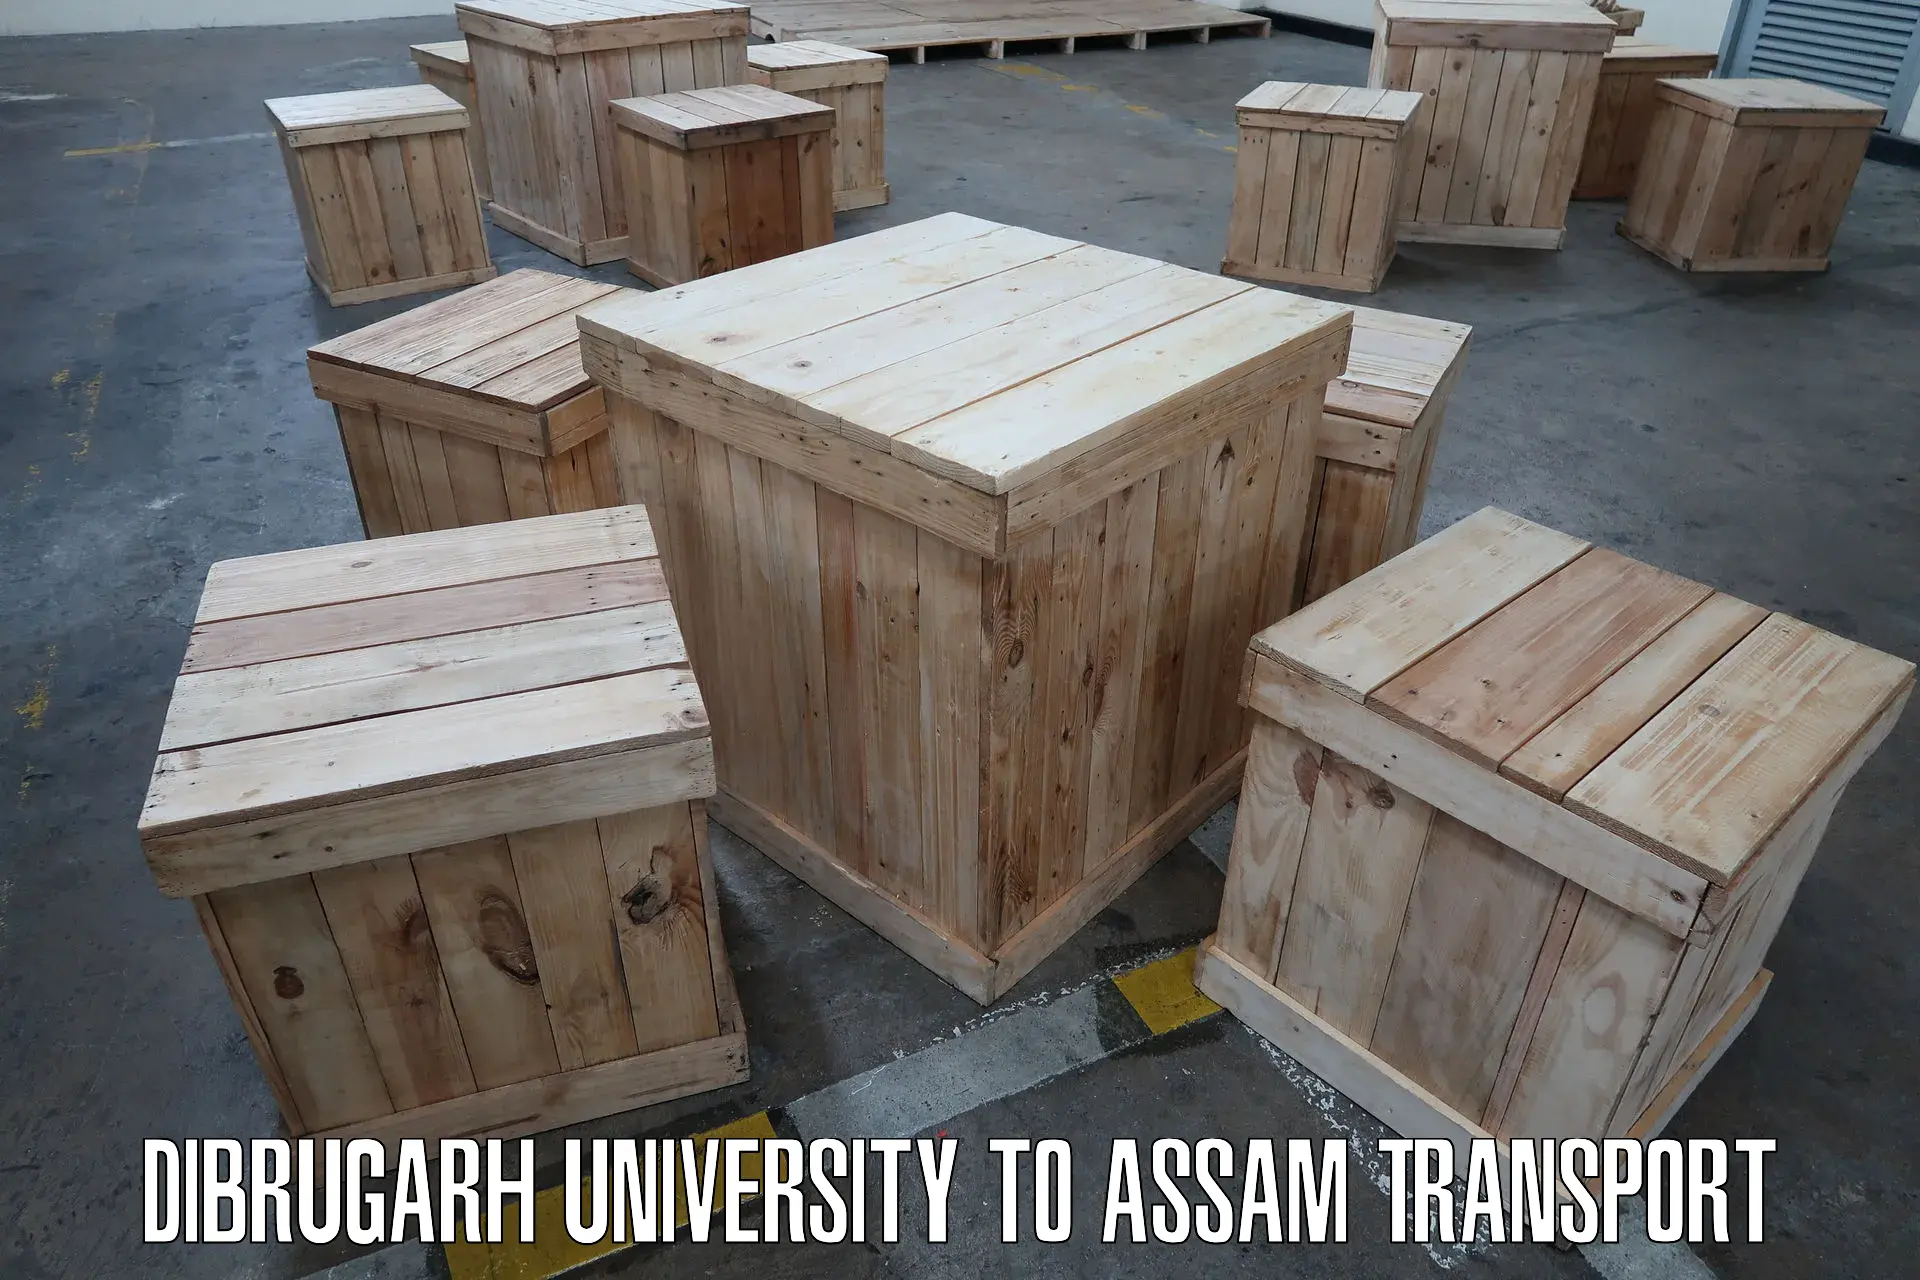 Furniture transport service Dibrugarh University to Jorhat